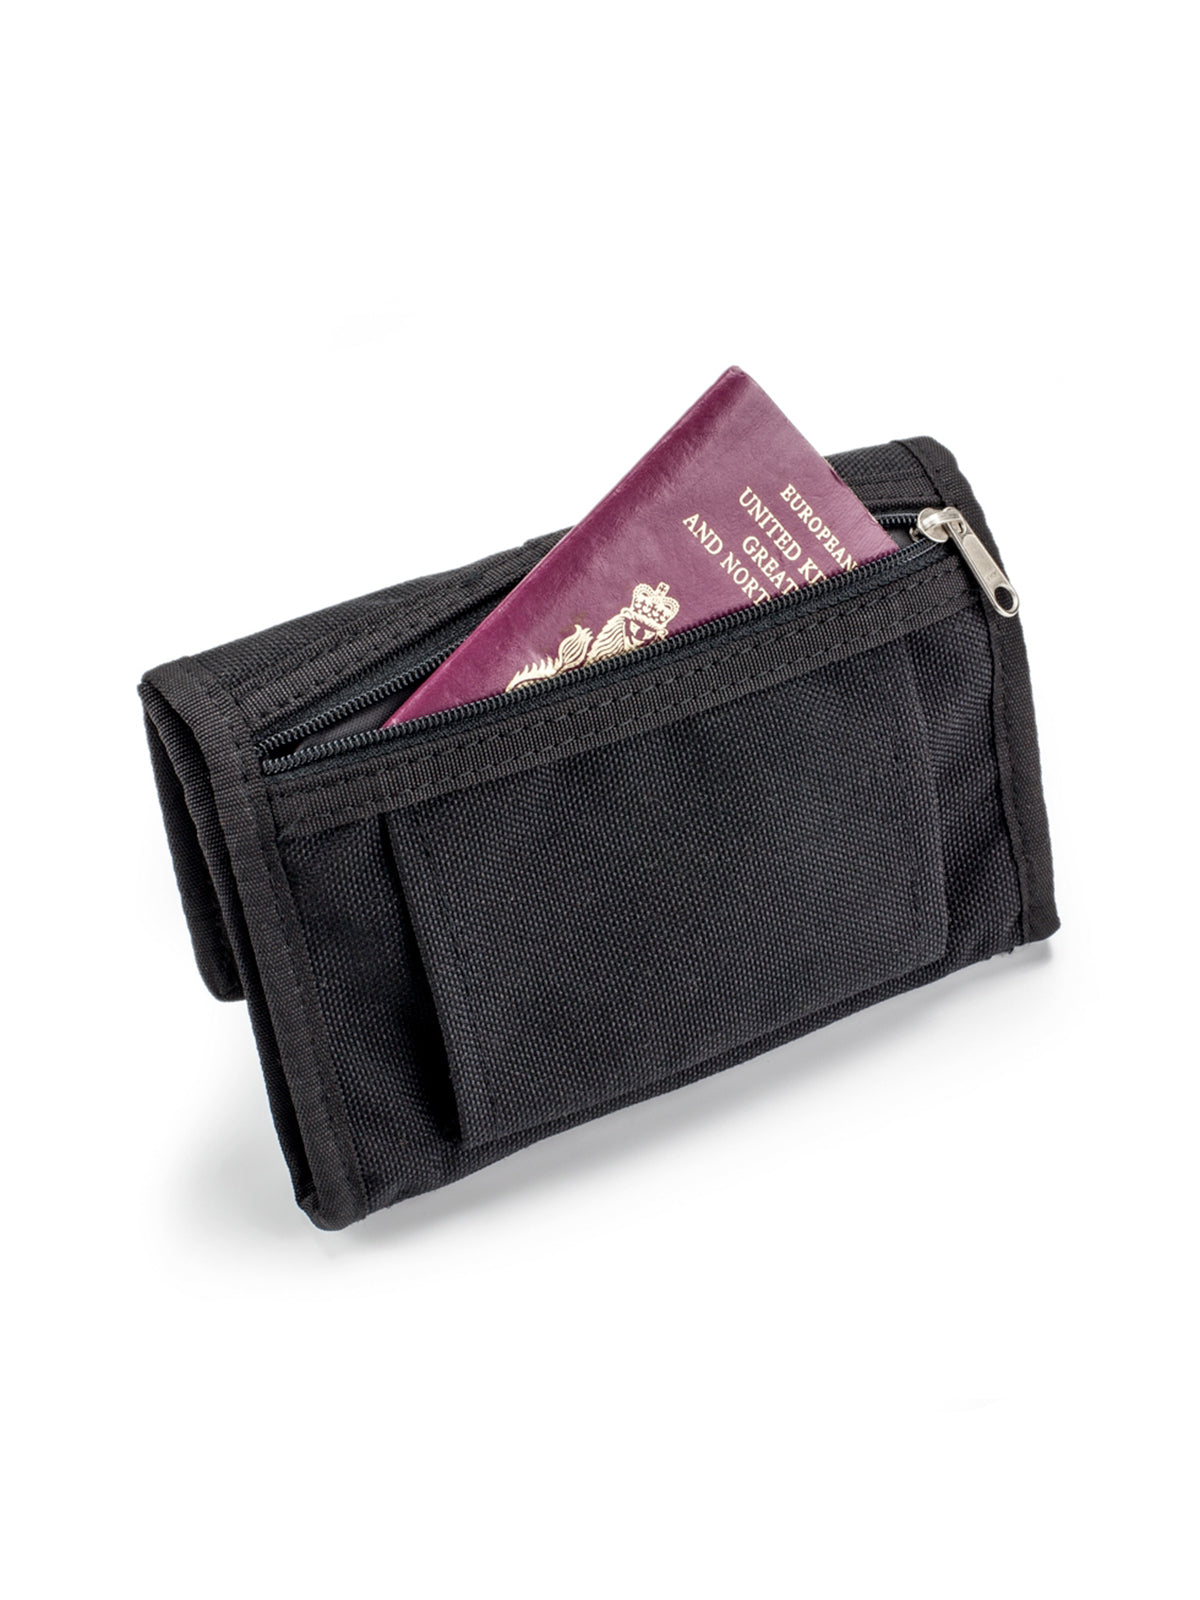 Kriega Stash Wallet with passport pocket